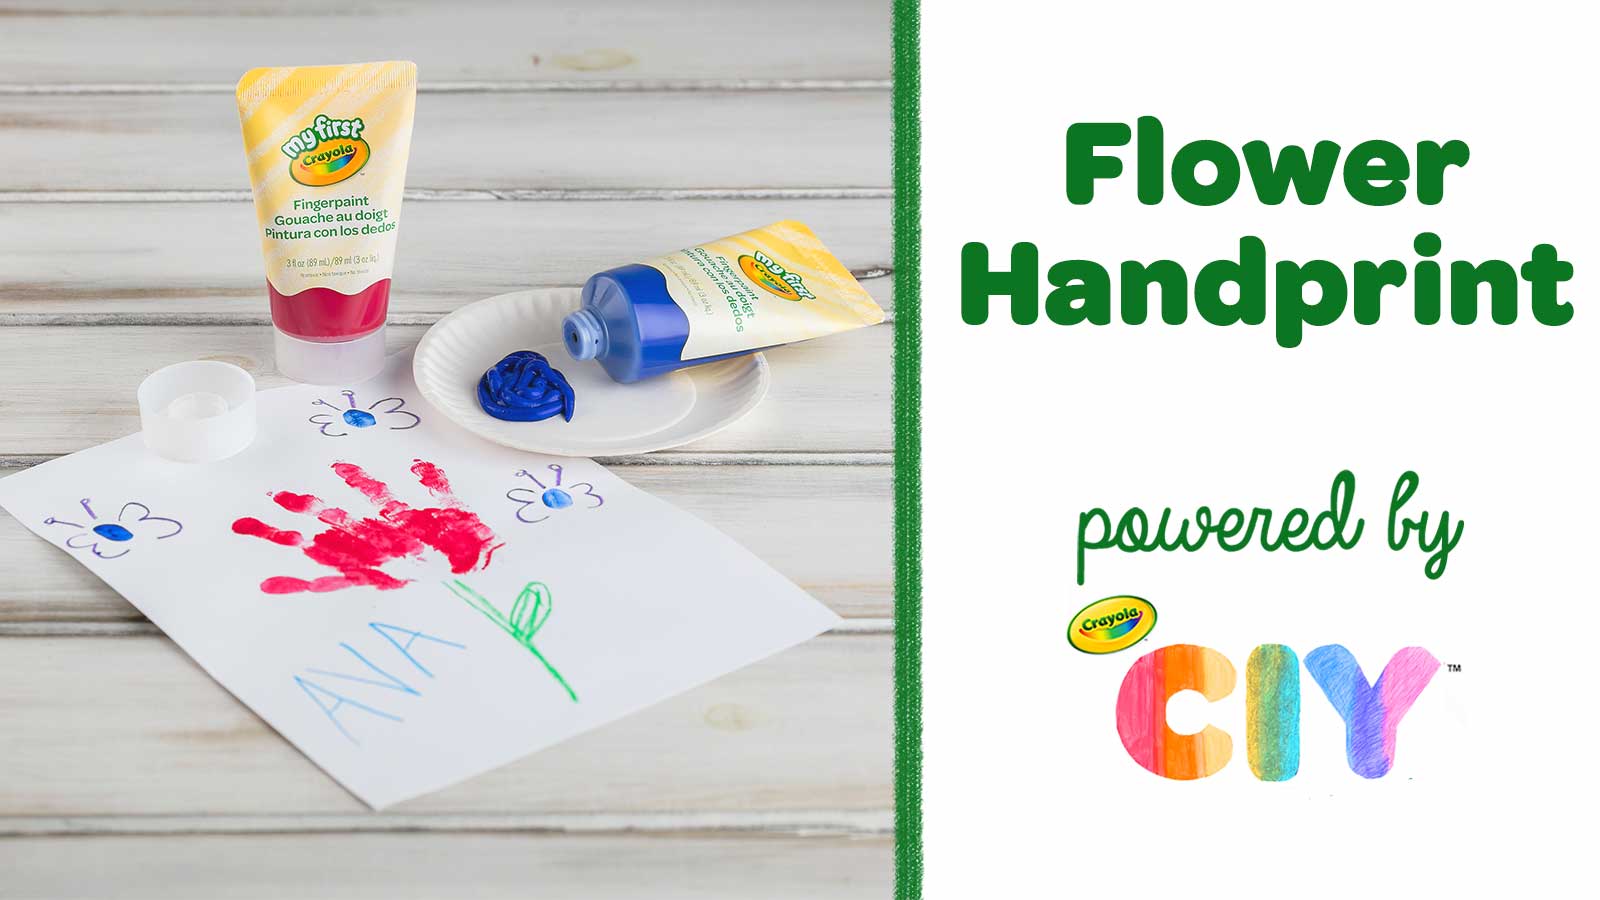 American Crafts Best Ideas for Kids Craft Kit Handprint Cards